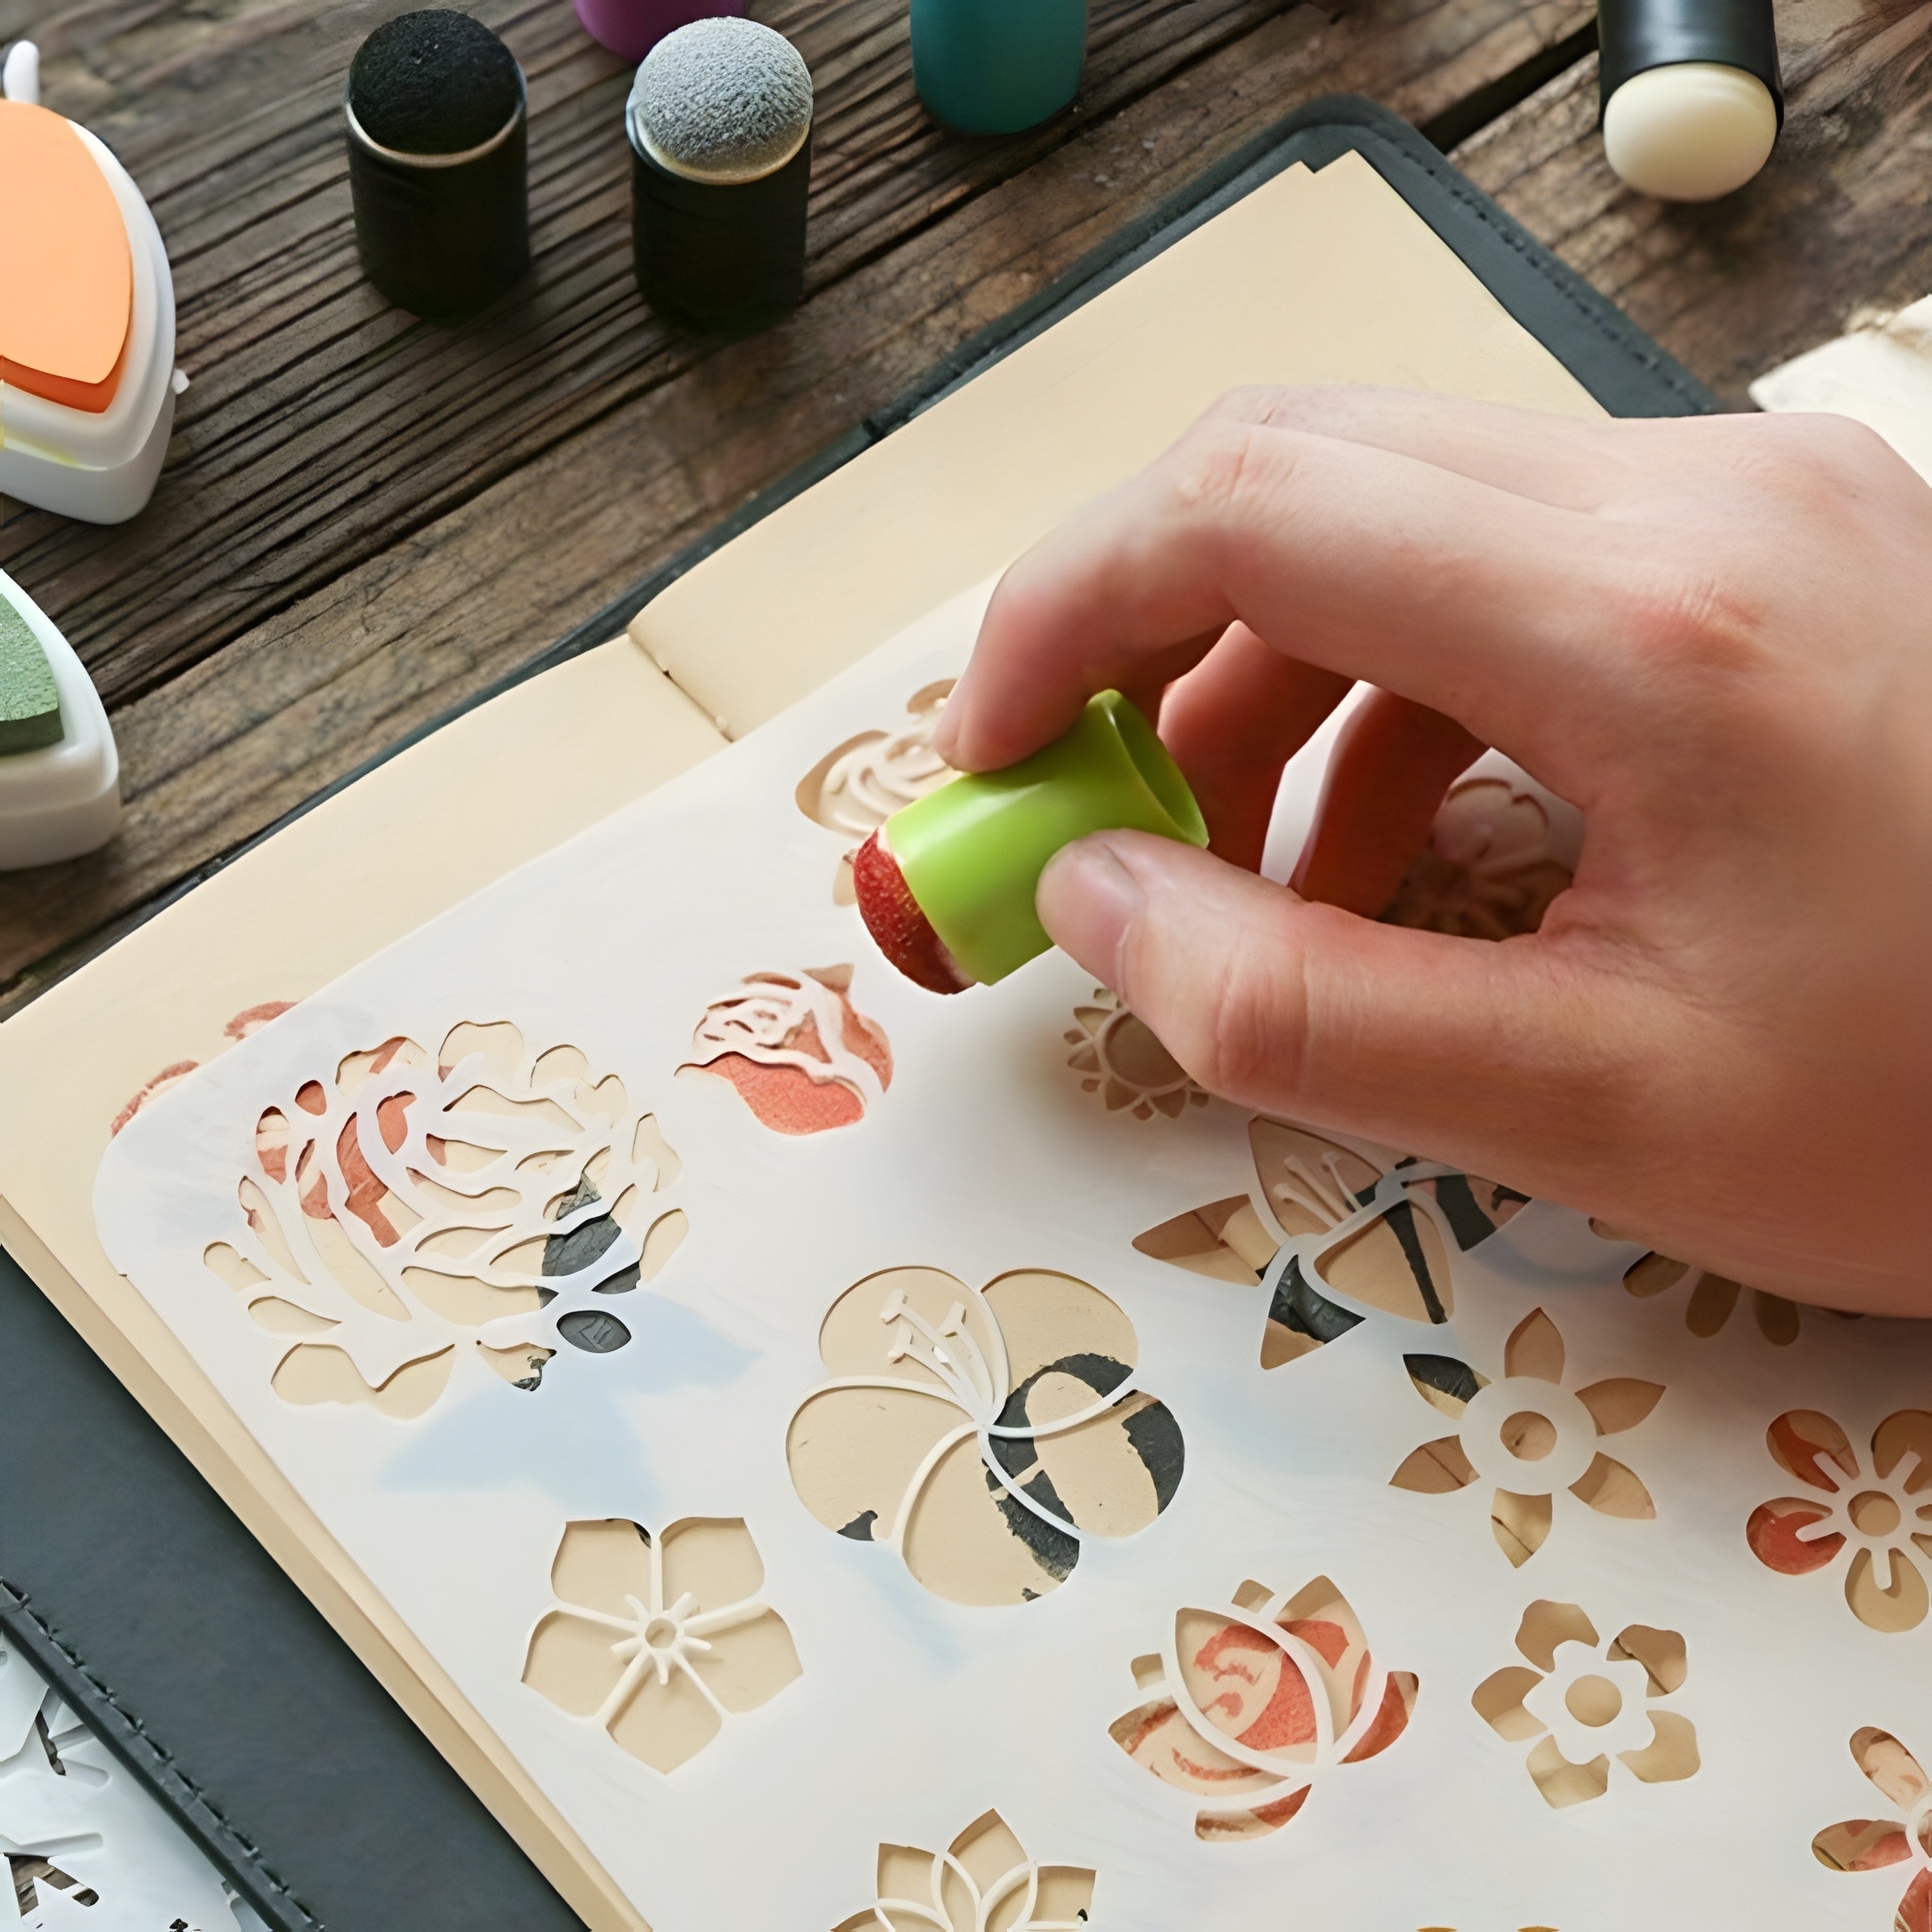 1pcs Colorful Gradient Craft Inkpad for Stamp Paint DIY Printing Crafts  Paper Wood Fabric Kids Fingerprint Ink Pad Stamp